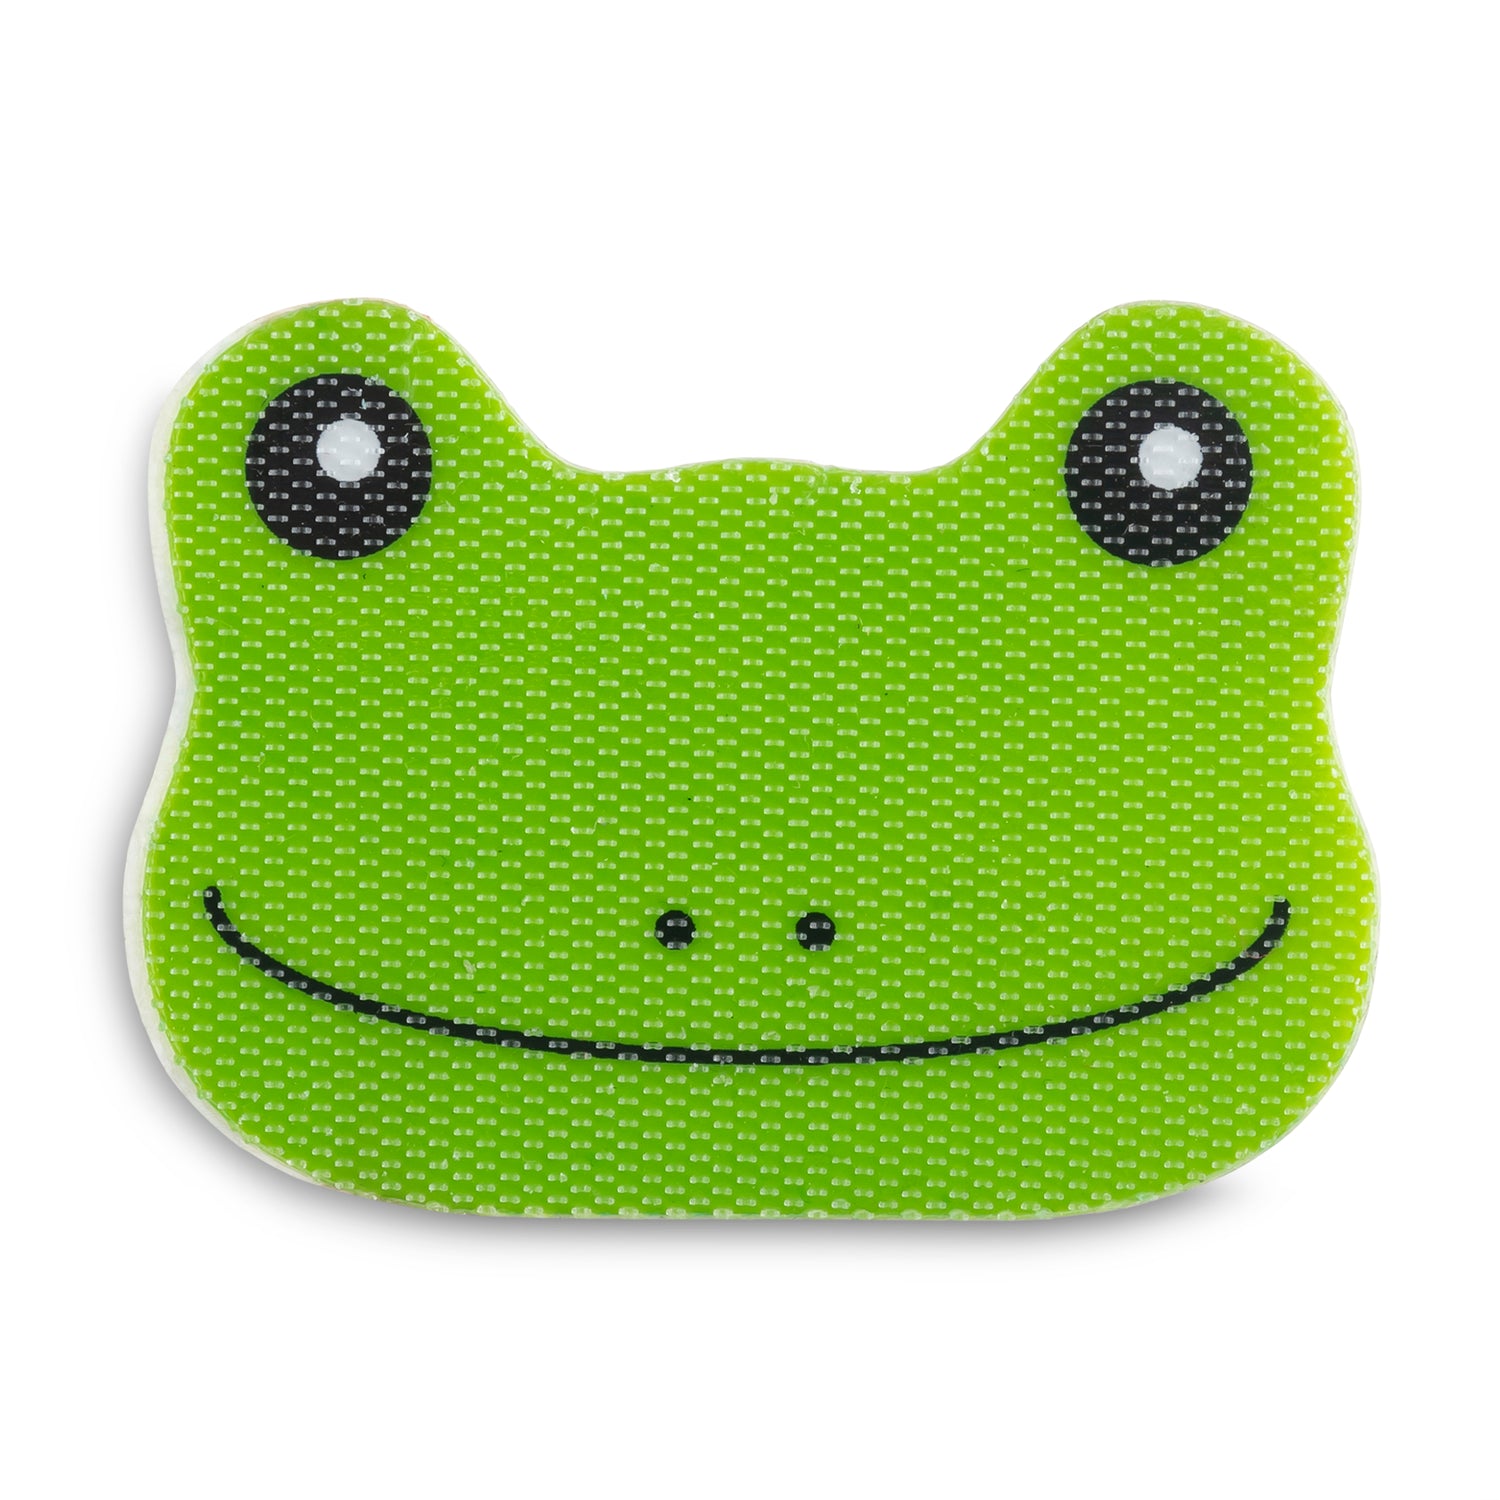 Animal Shape Novelty Kitchen Sponge Holder and Sponge Choice of Frog or  Duck (Green Frog)